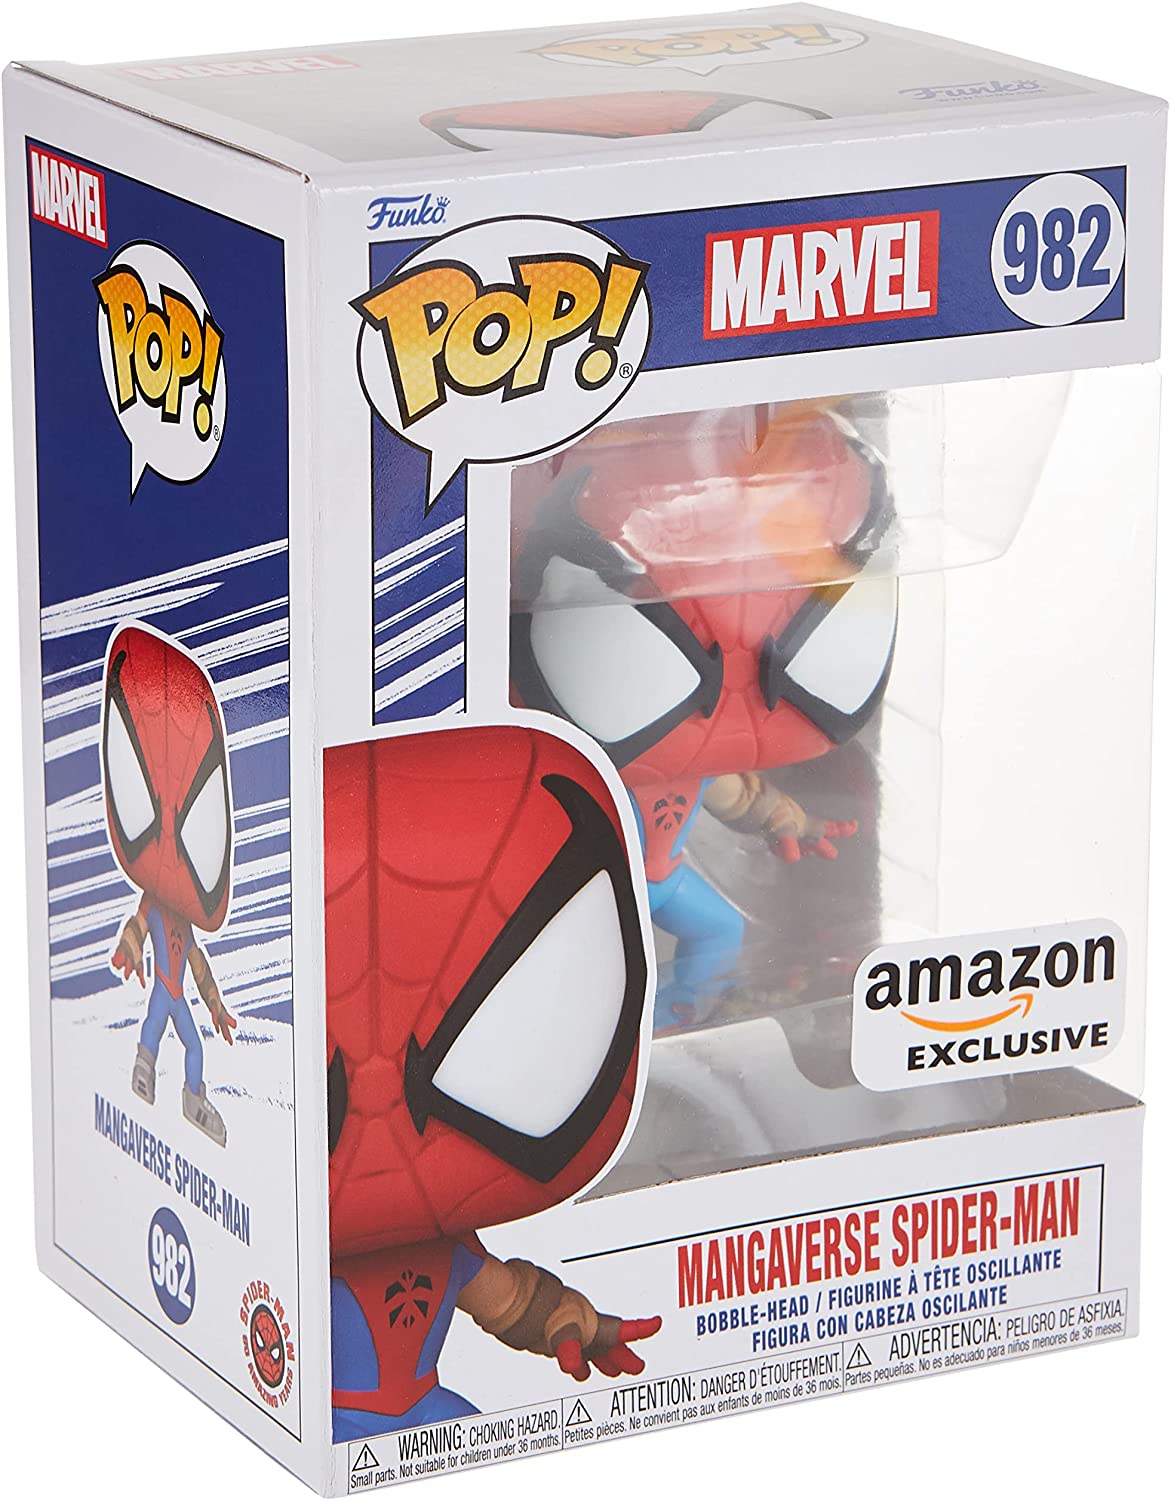 Funko Pop Marvel: SpiderMan - Mangaverse Spider-Man